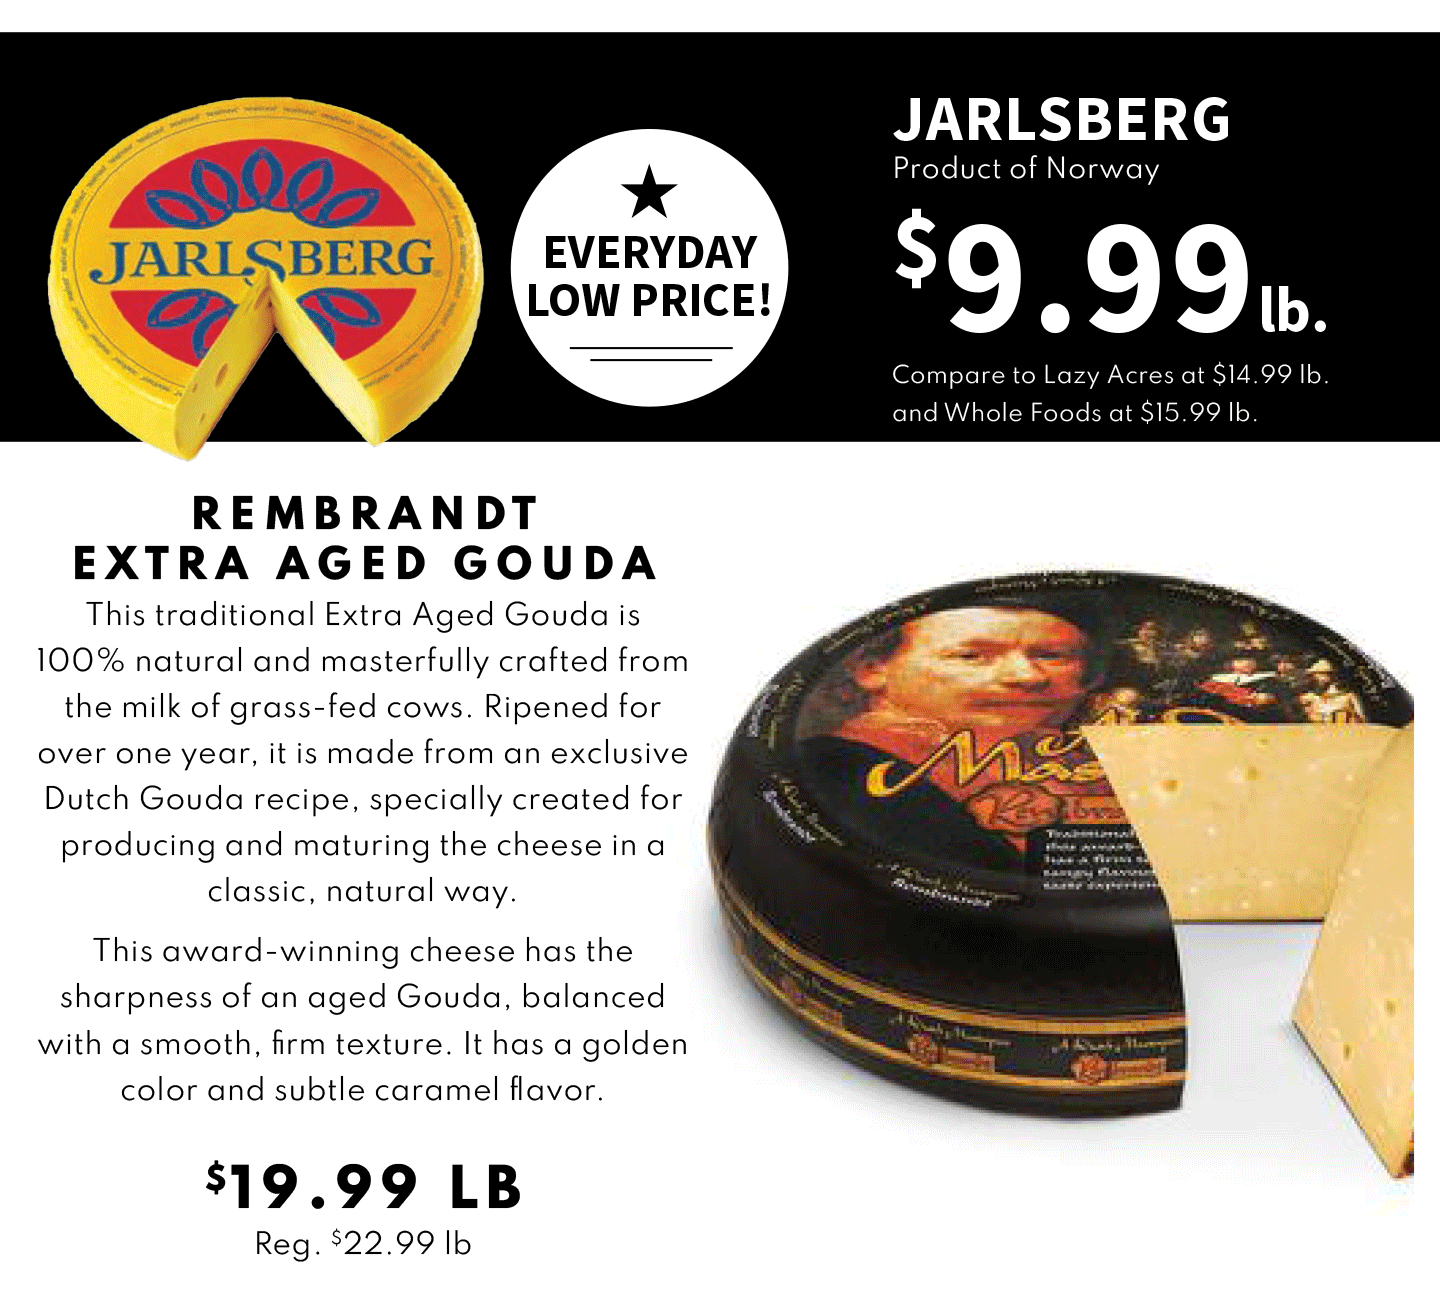 Jarlsberg $9.99 lb and Rembrandy Extra AGed Gouda $19.99 lb